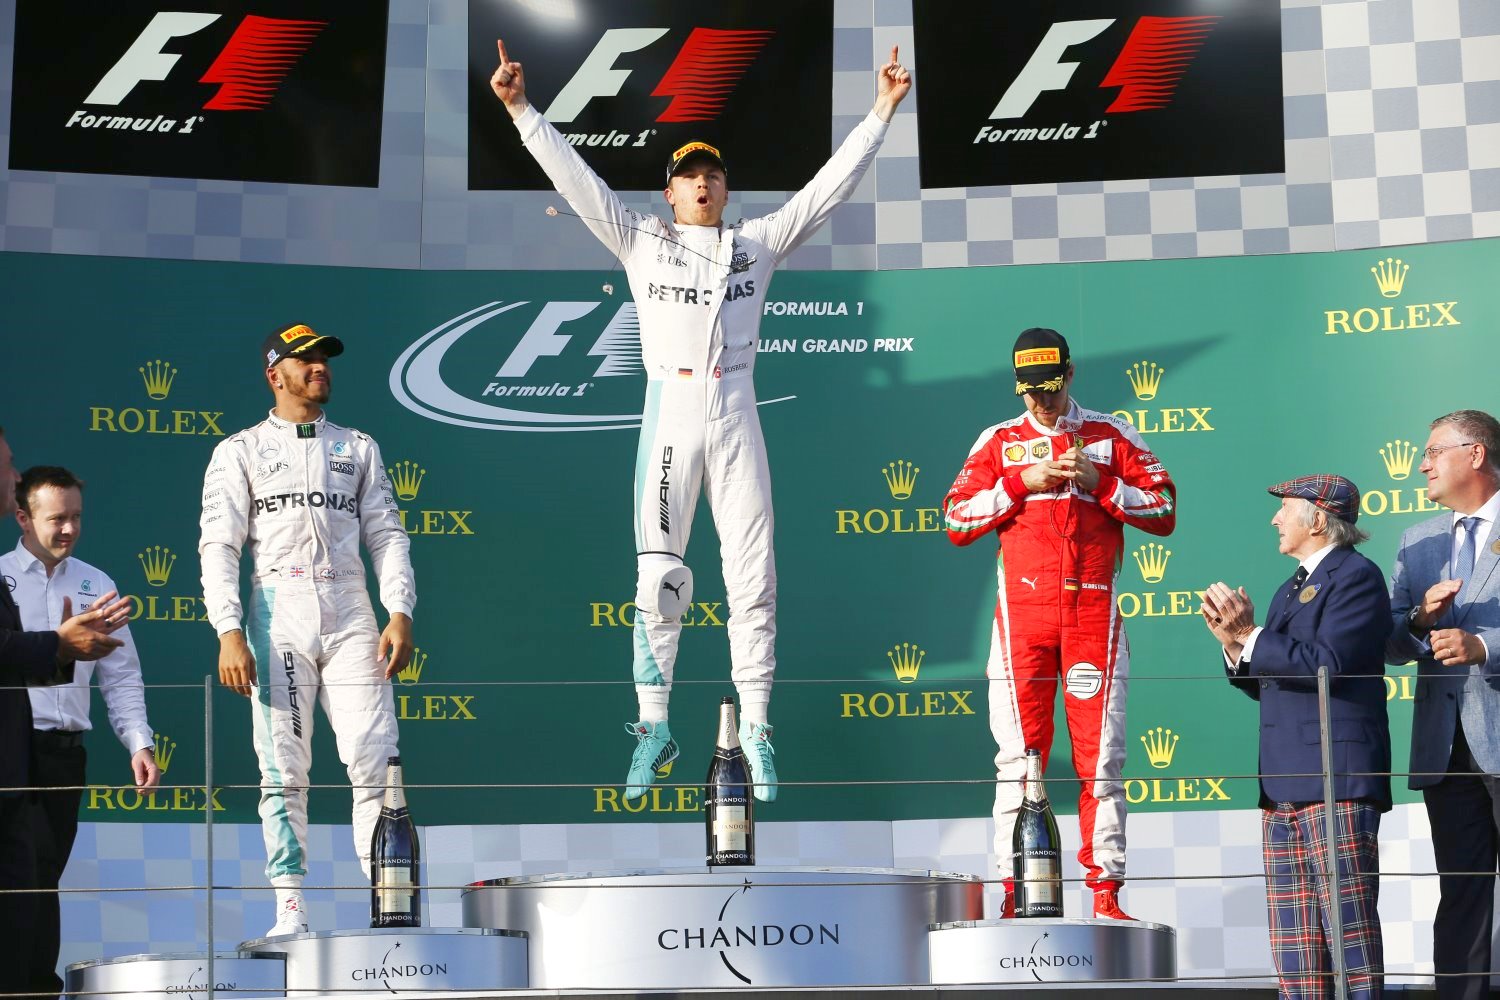 From left, Hamilton, Rosberg and Vettel celebrate on the podium